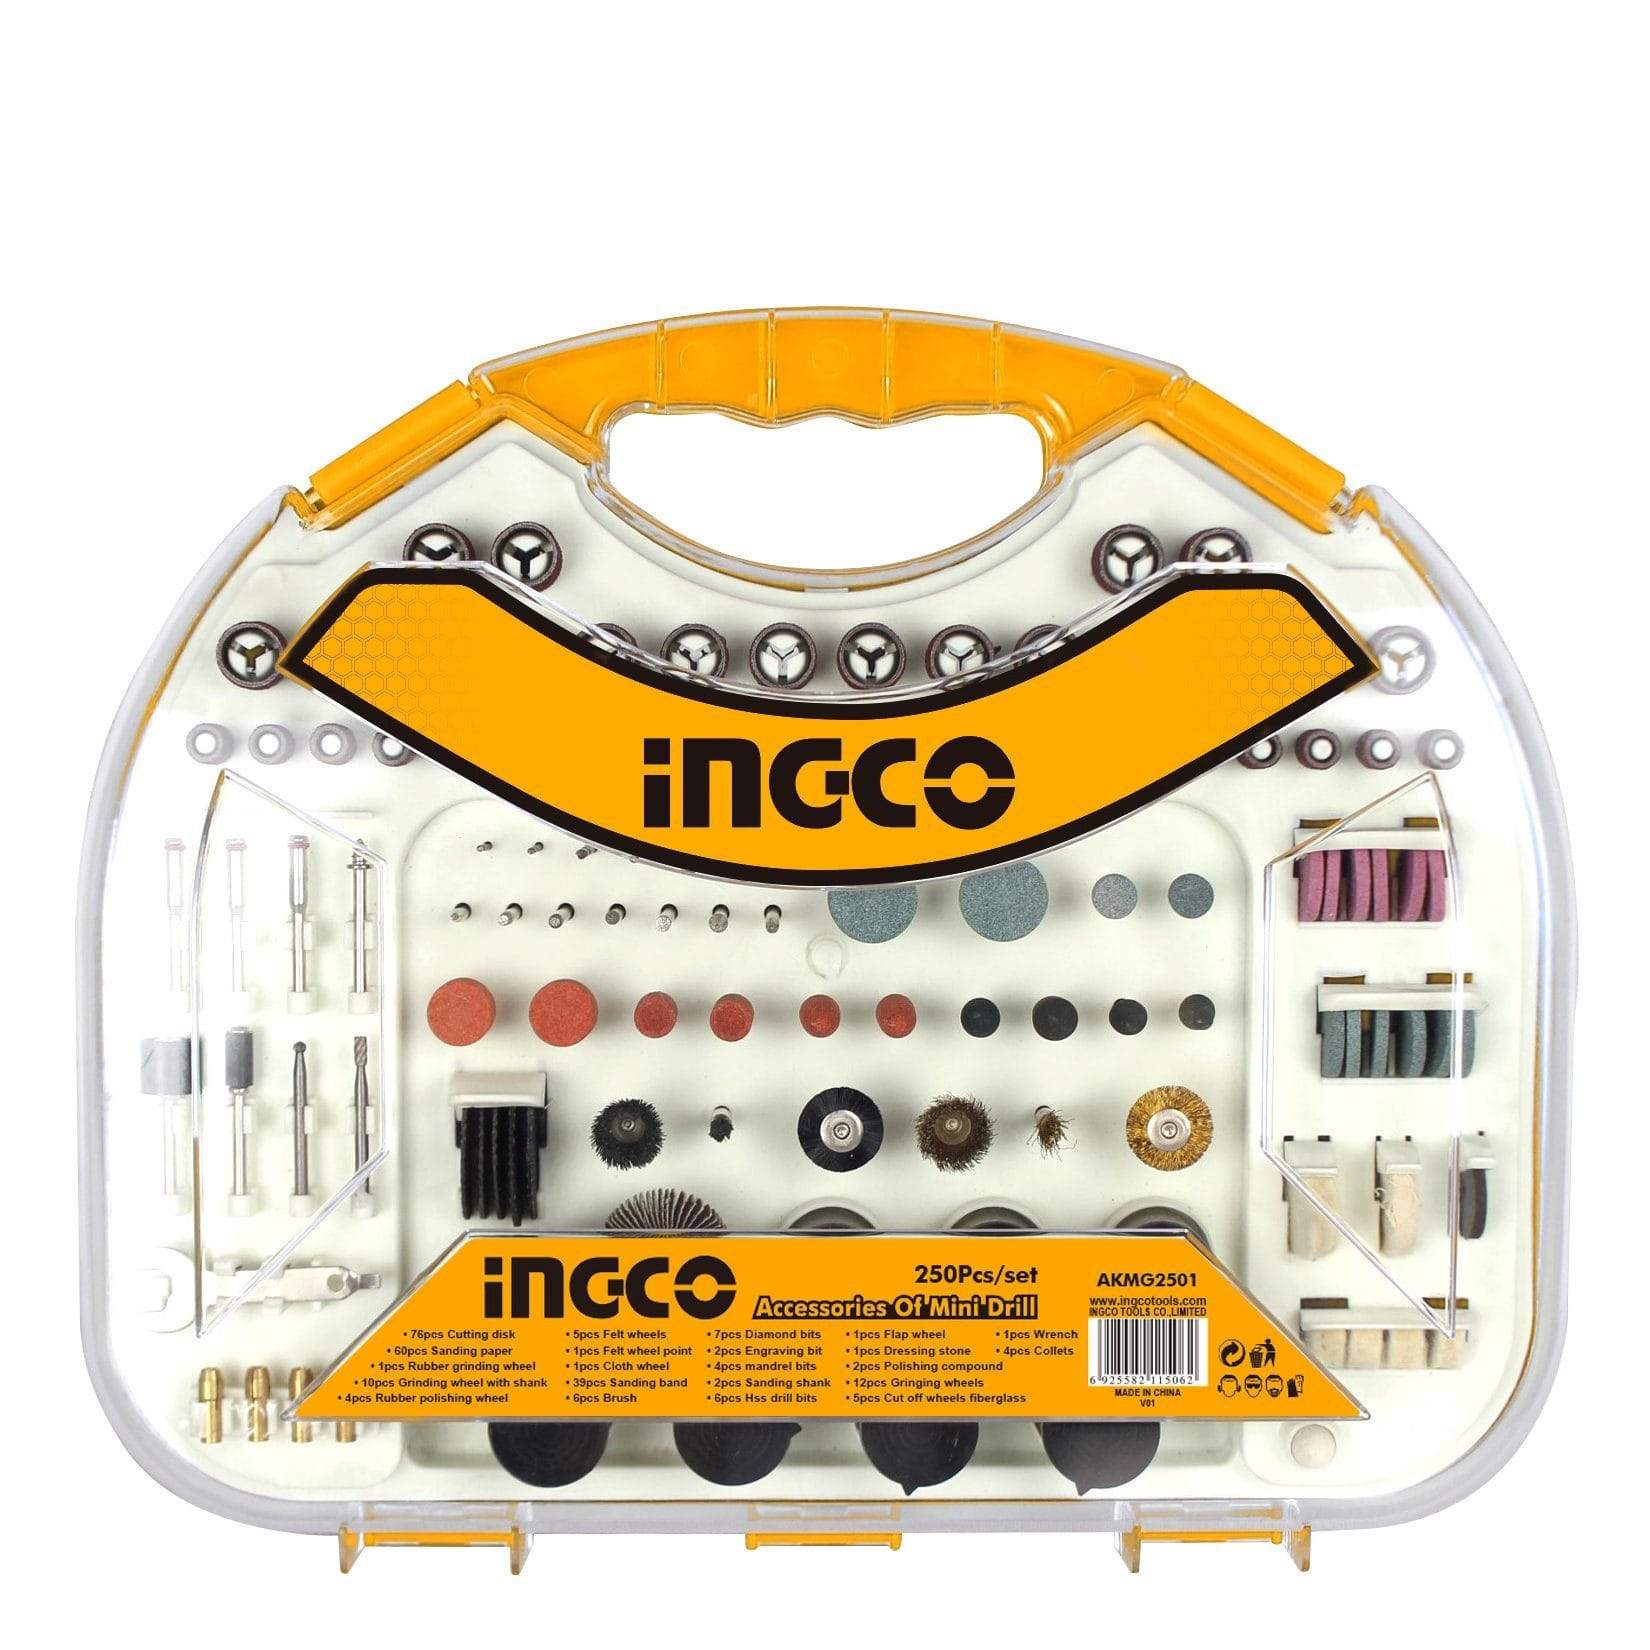 Ingco 250 Pieces Accessories of Mini Drill - AKMG2501